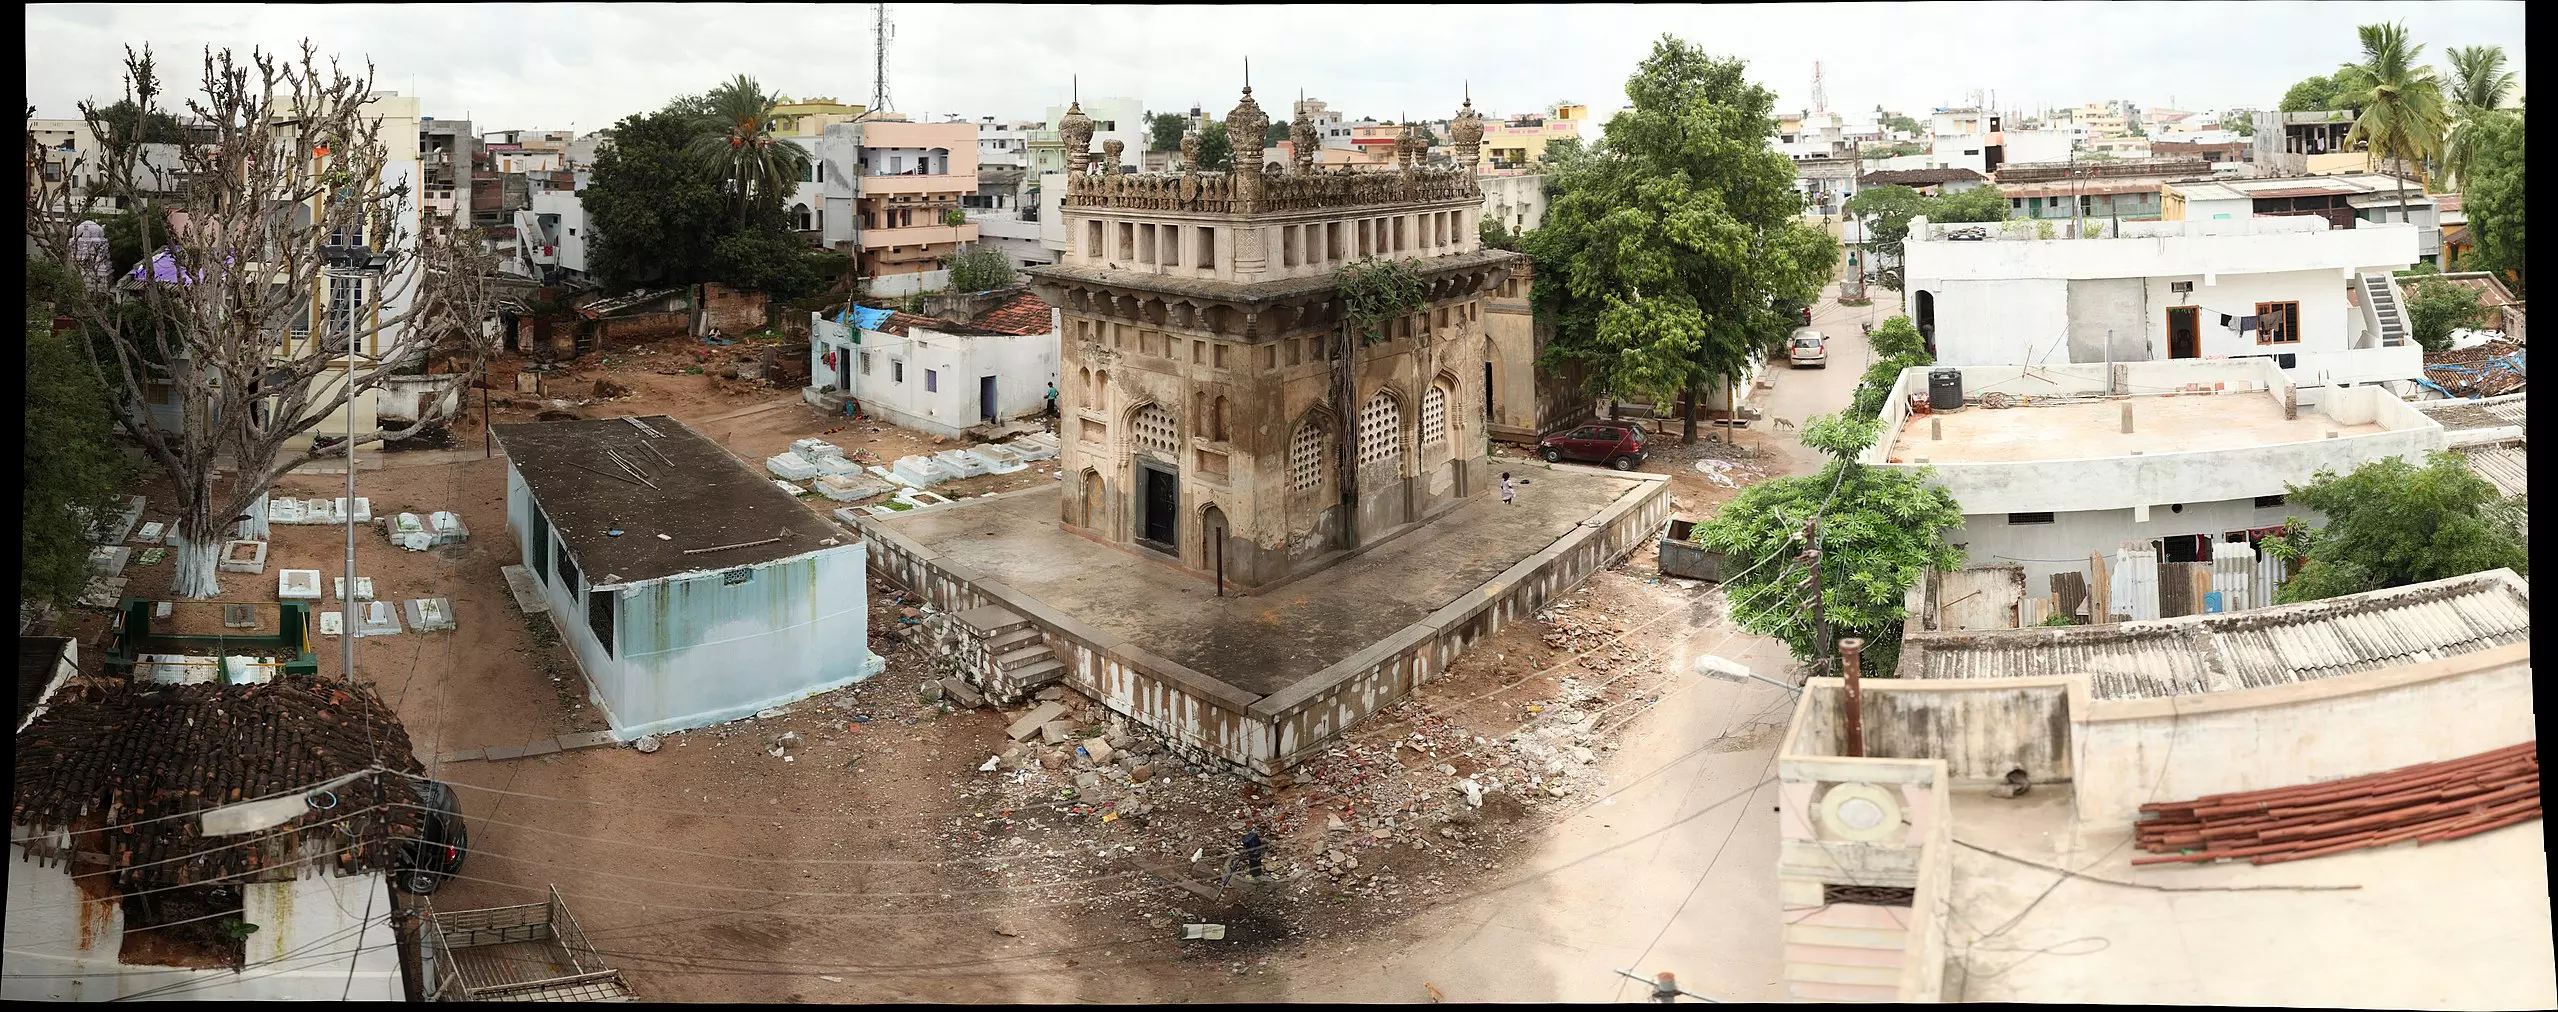 Qutb Shahi envoy’s tomb in Hyderabad lies in ruins